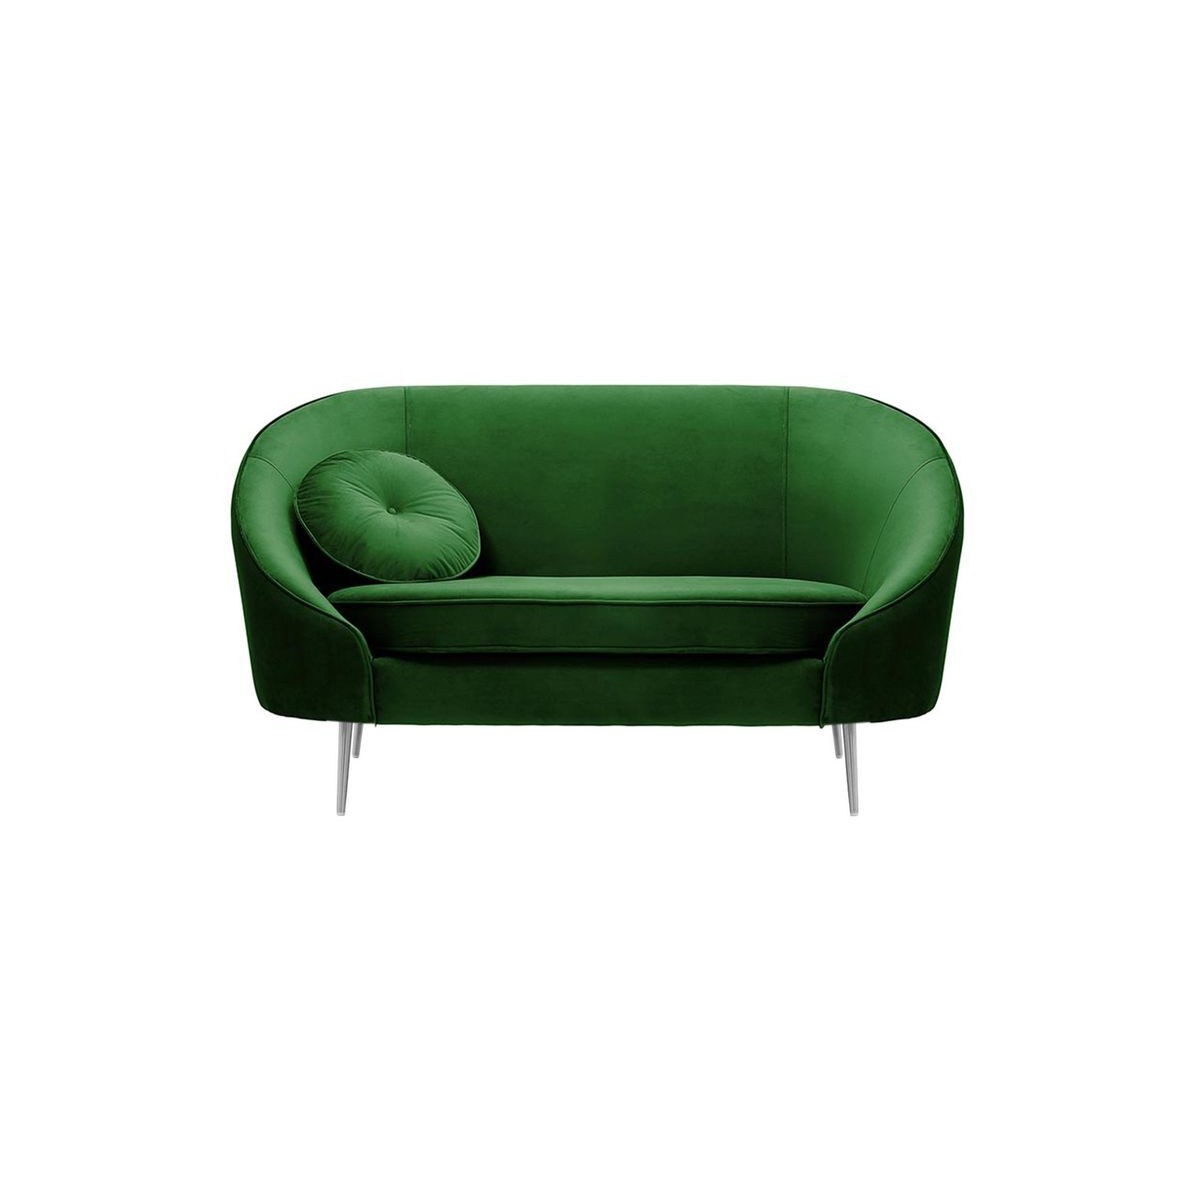 Kooper 2 Seater Sofa, dark green, Leg colour: chrome metal - image 1